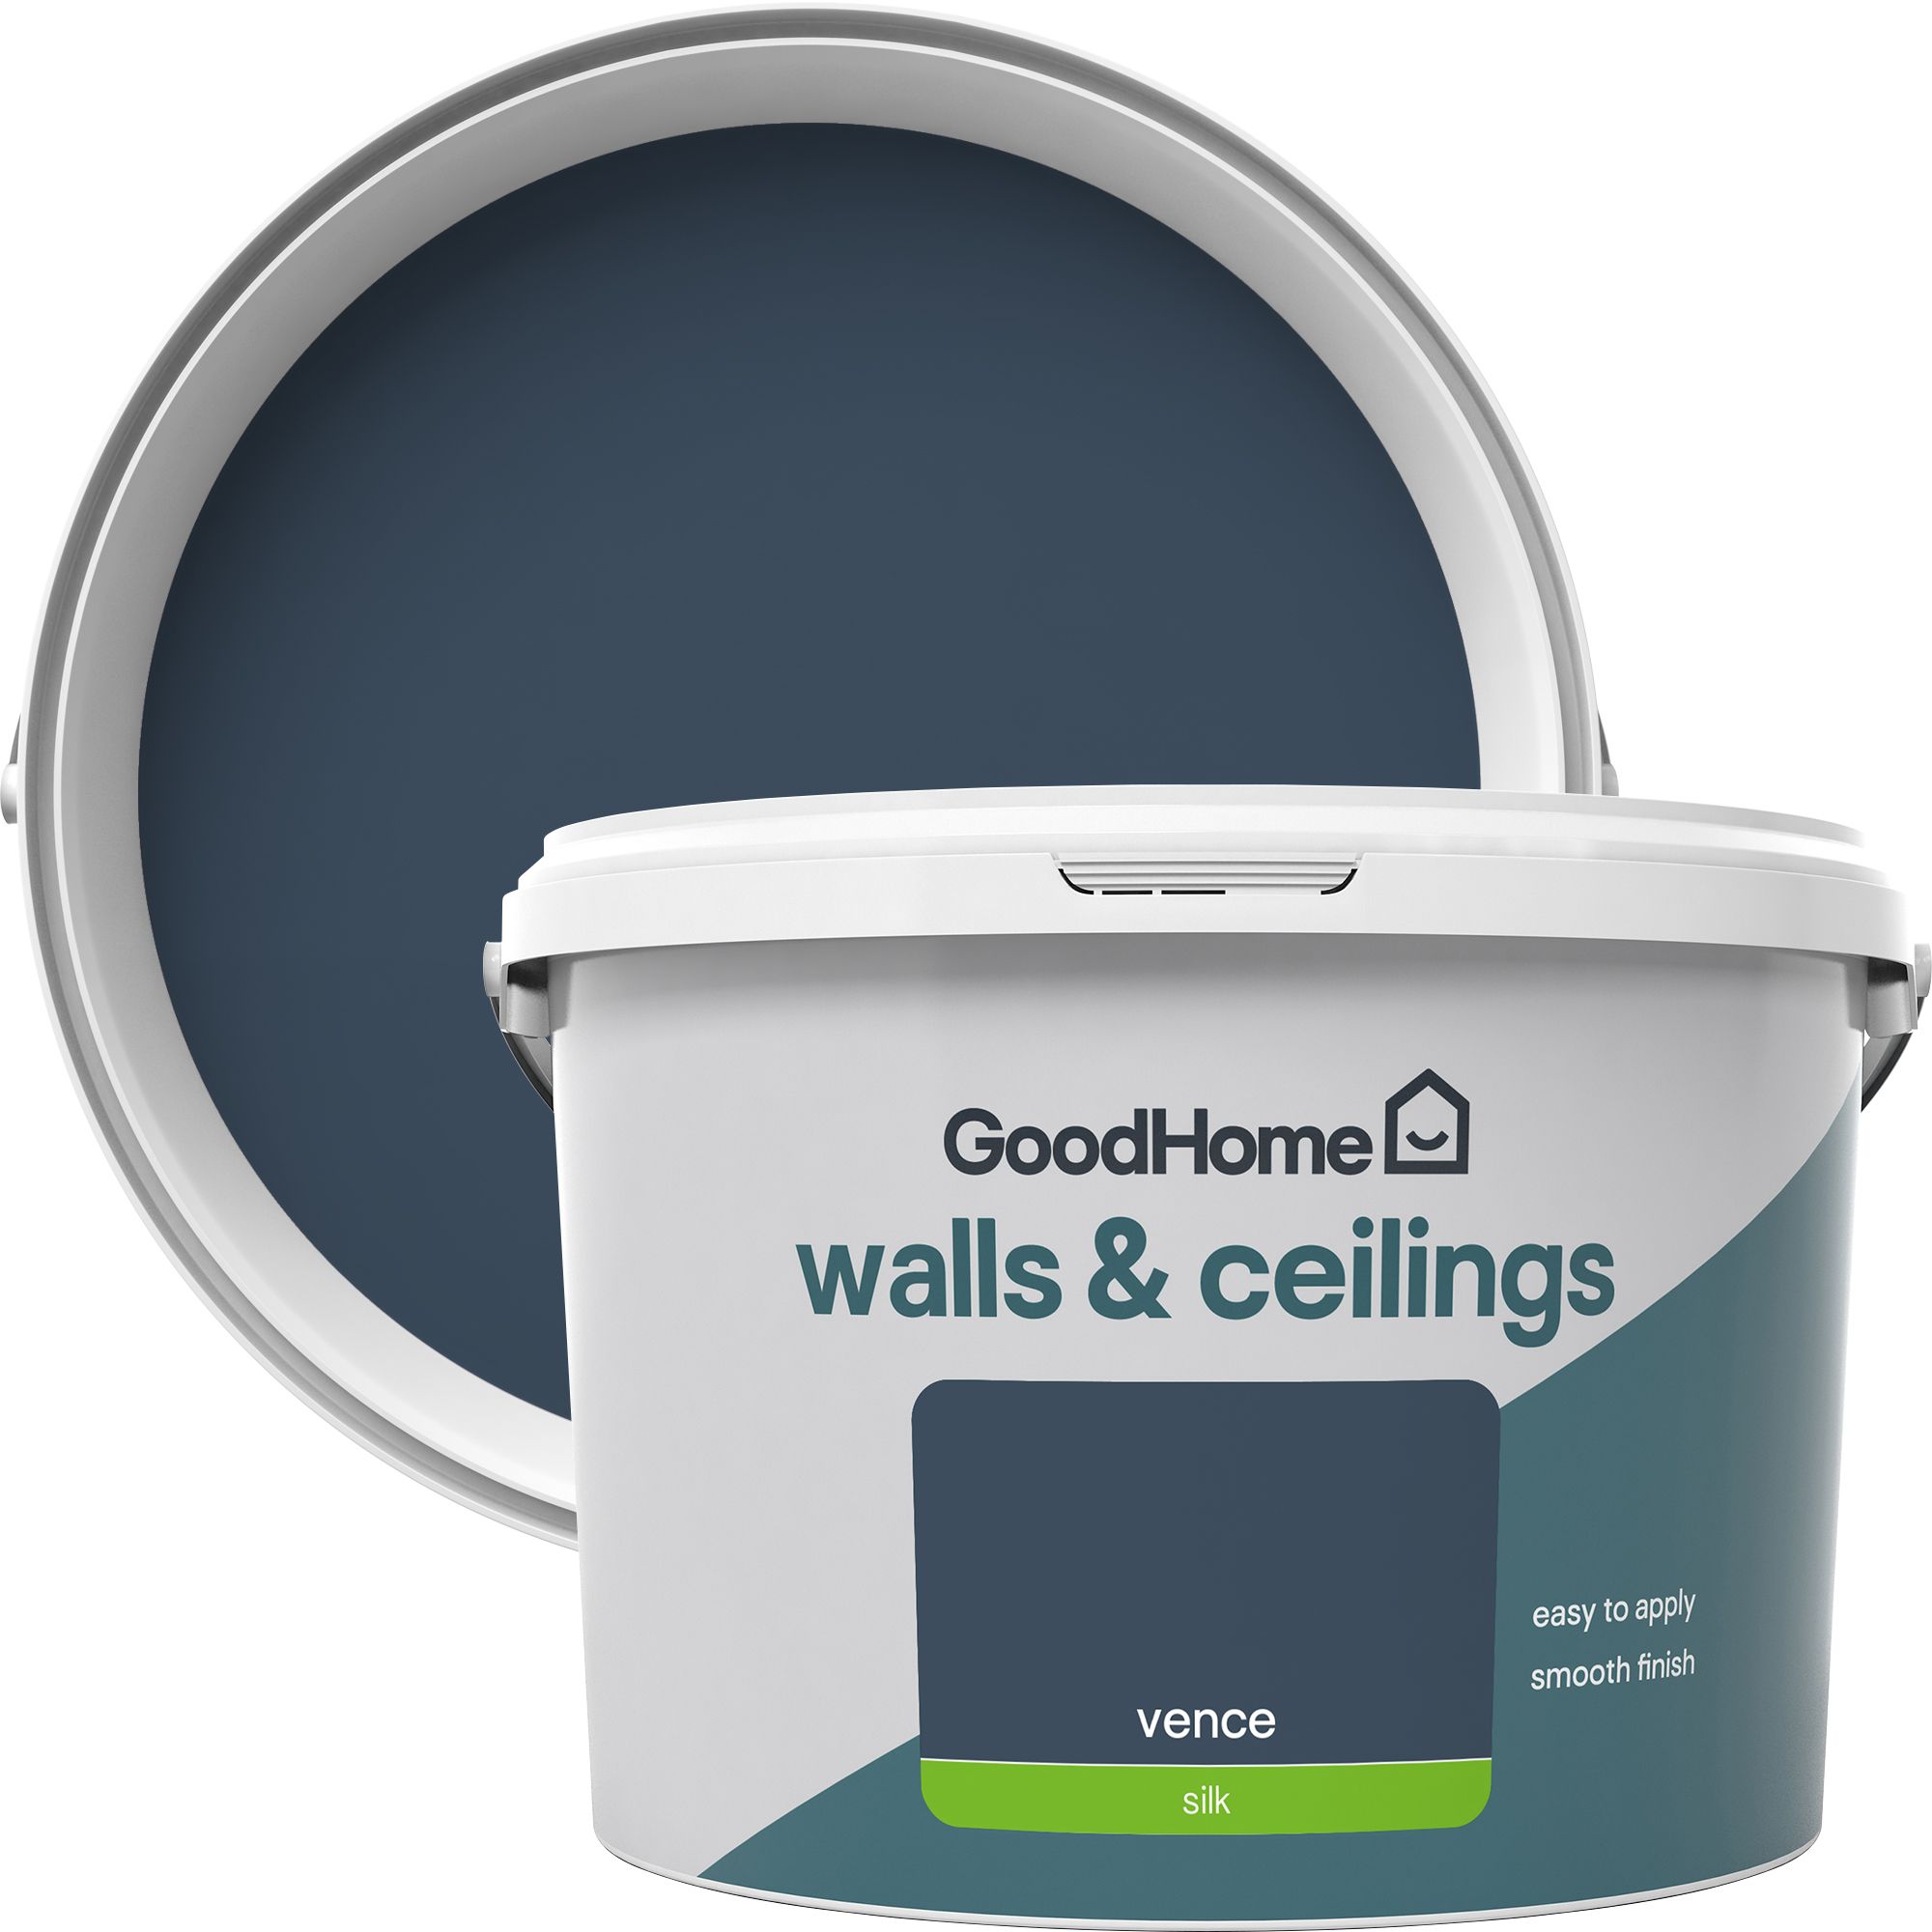 GoodHome Walls & ceilings Vence Silk Emulsion paint, 2.5L